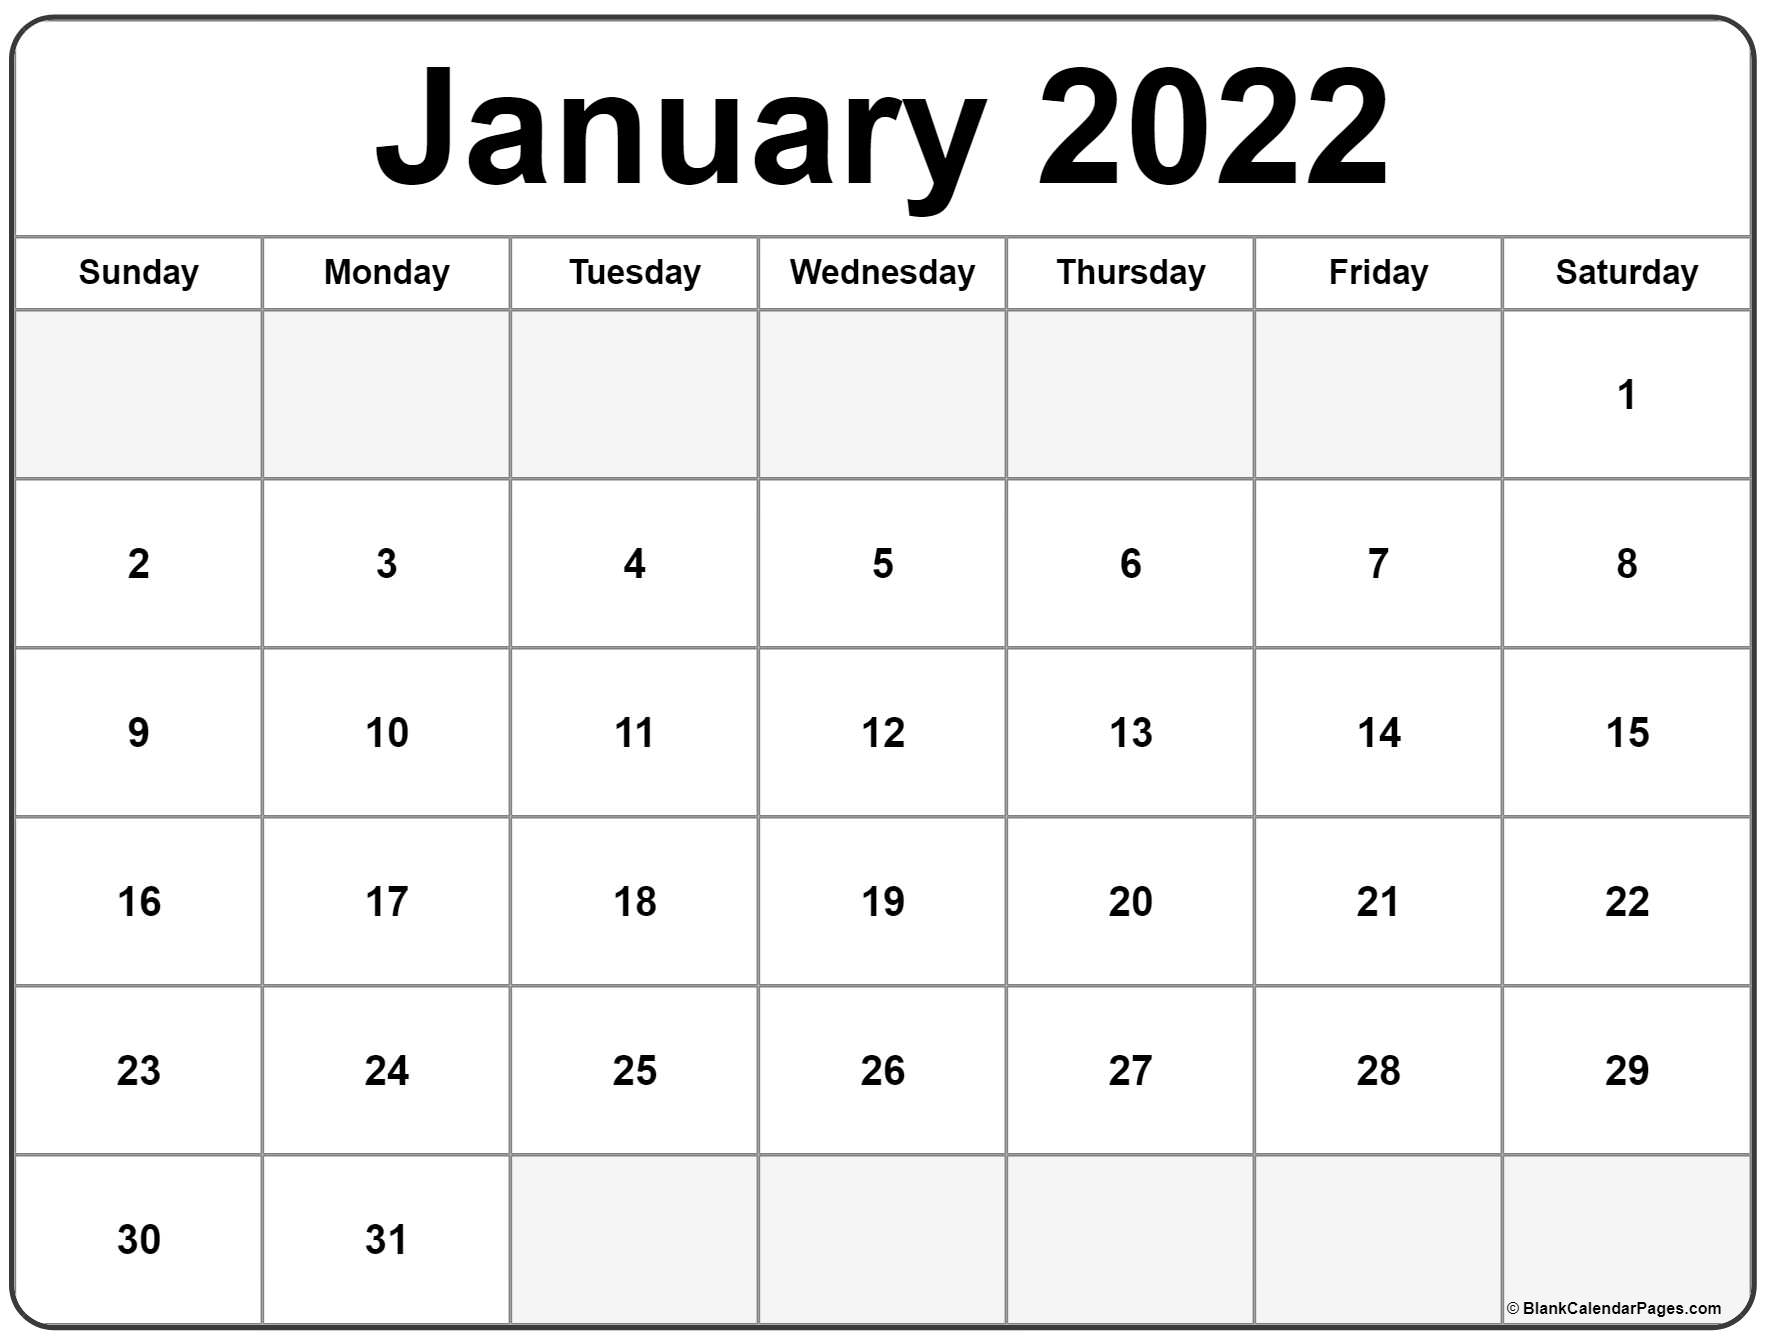 Pick January 2022 Calendar Dates